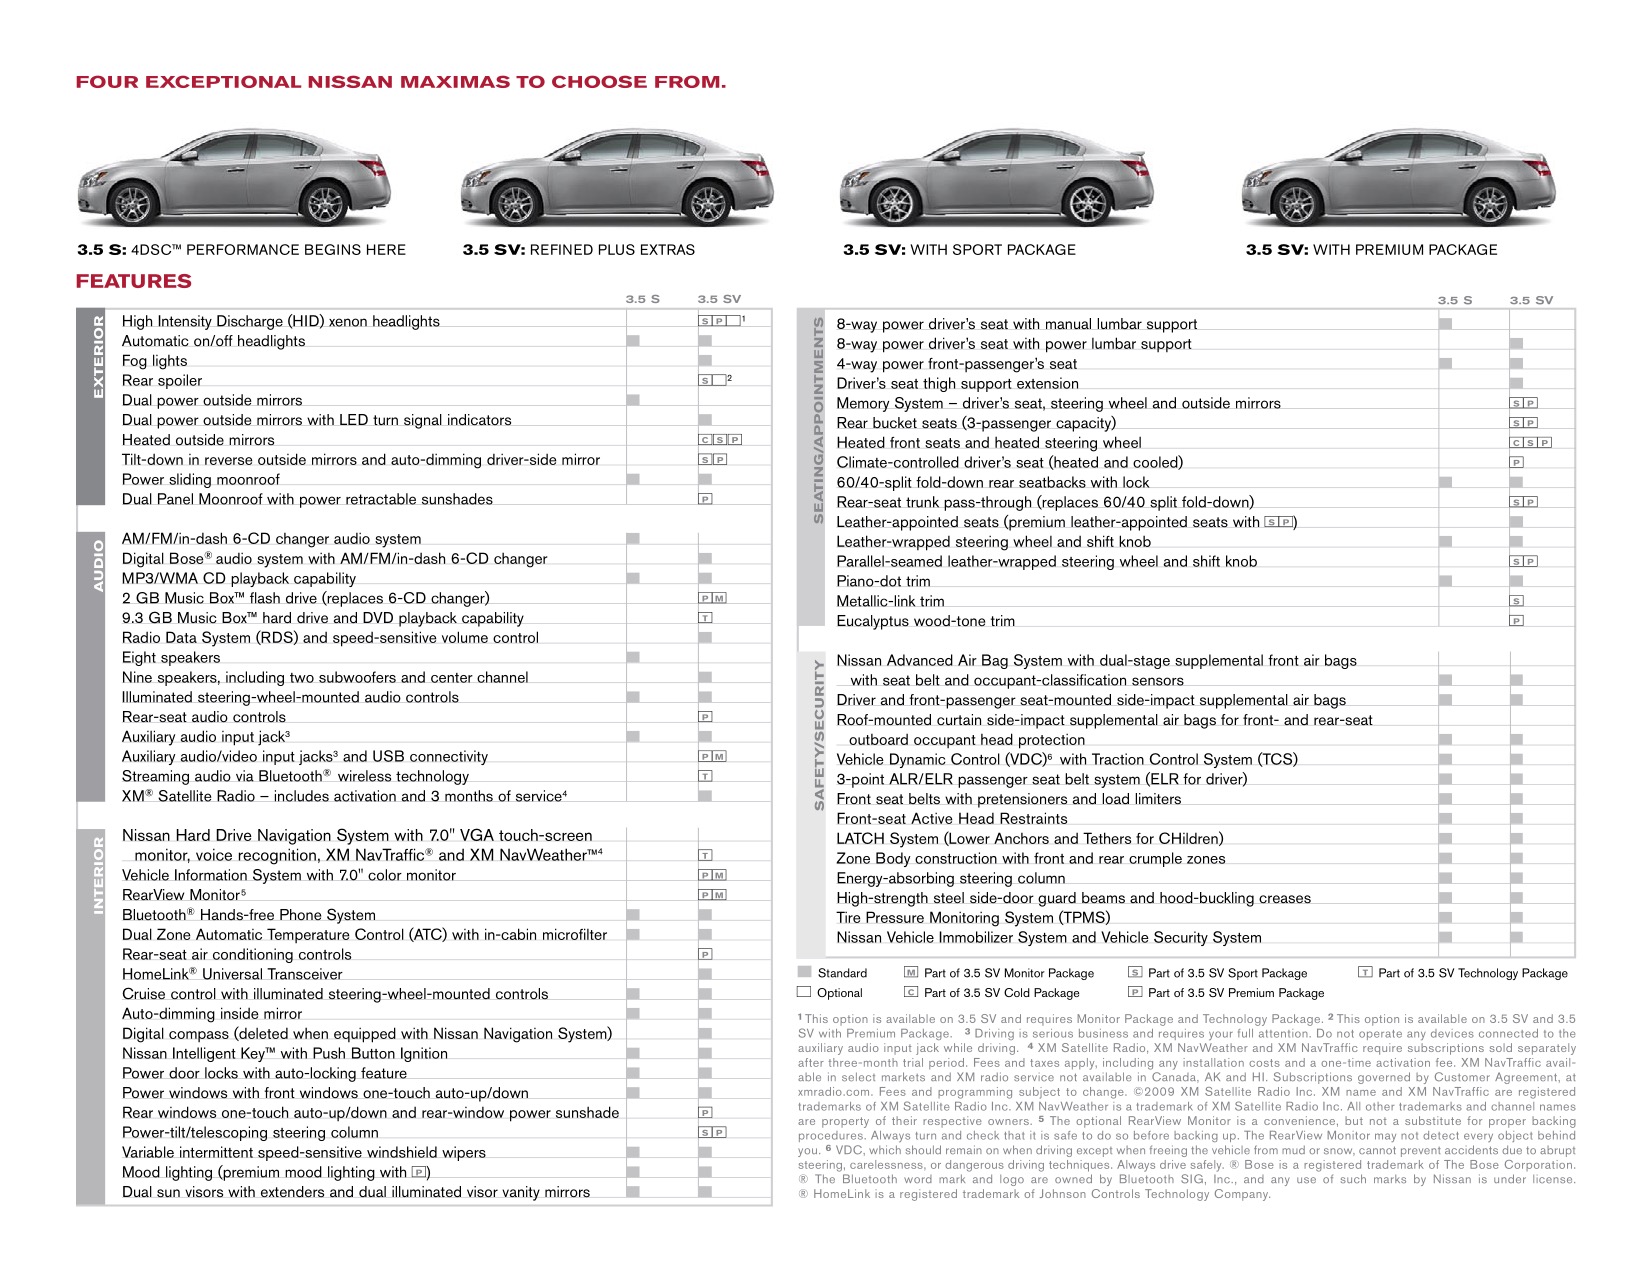 2010 Nissan Maxima Brochure Page 1